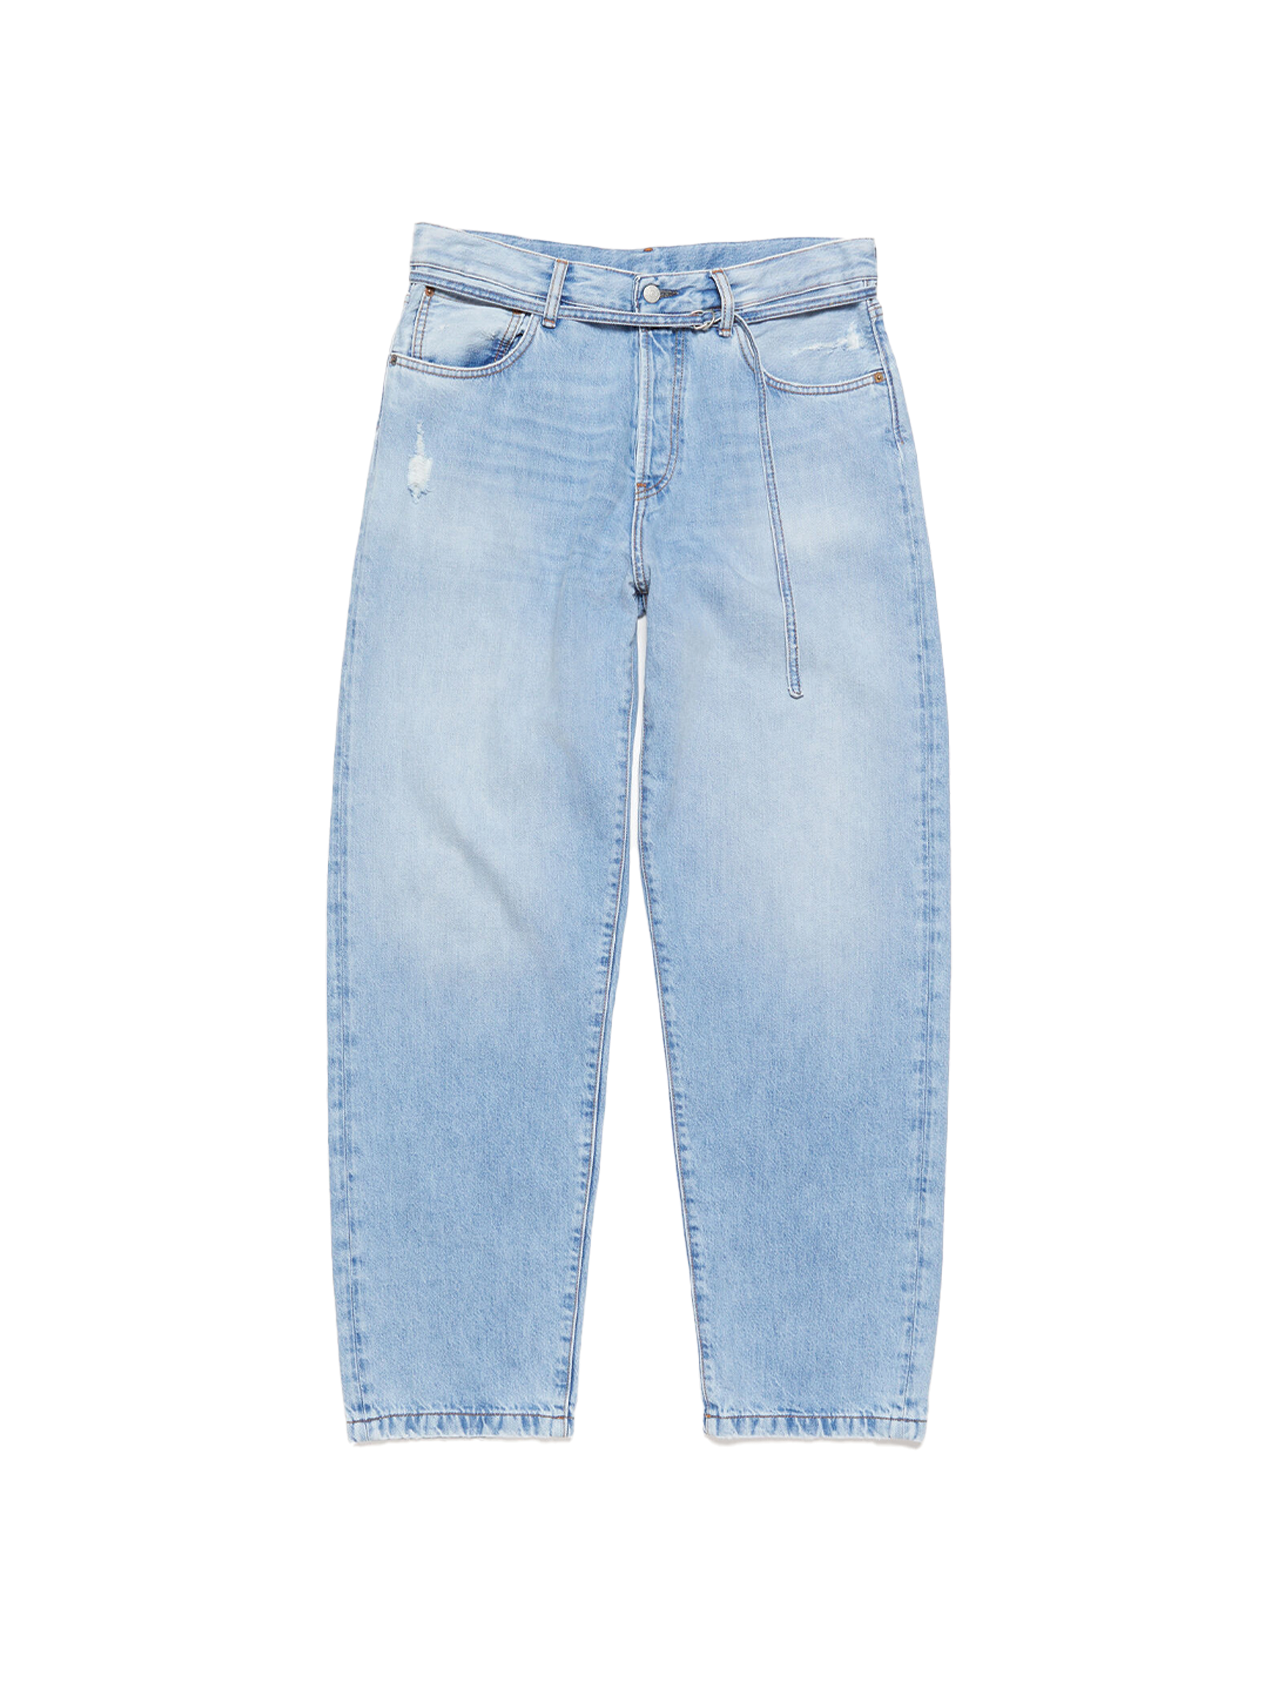 Acne Studios Light Blue Loose Fit 1991 Jeans